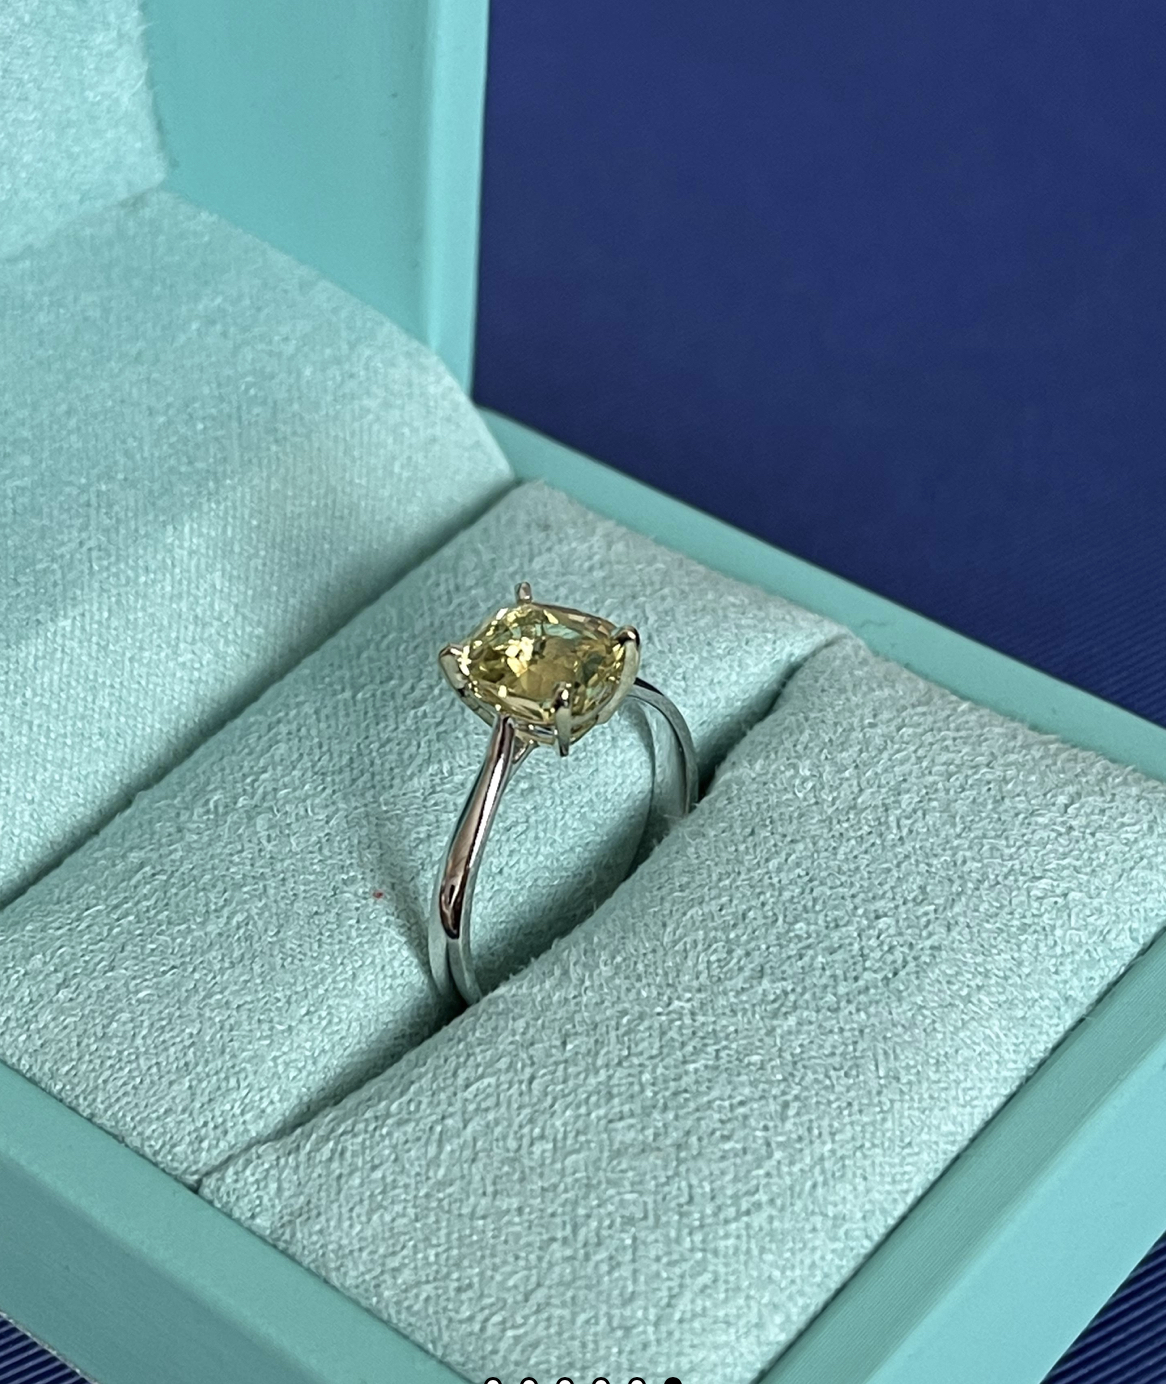 Кольцо с жёлтым бриллиантом(0,55 ct.) из платины 950 пробы